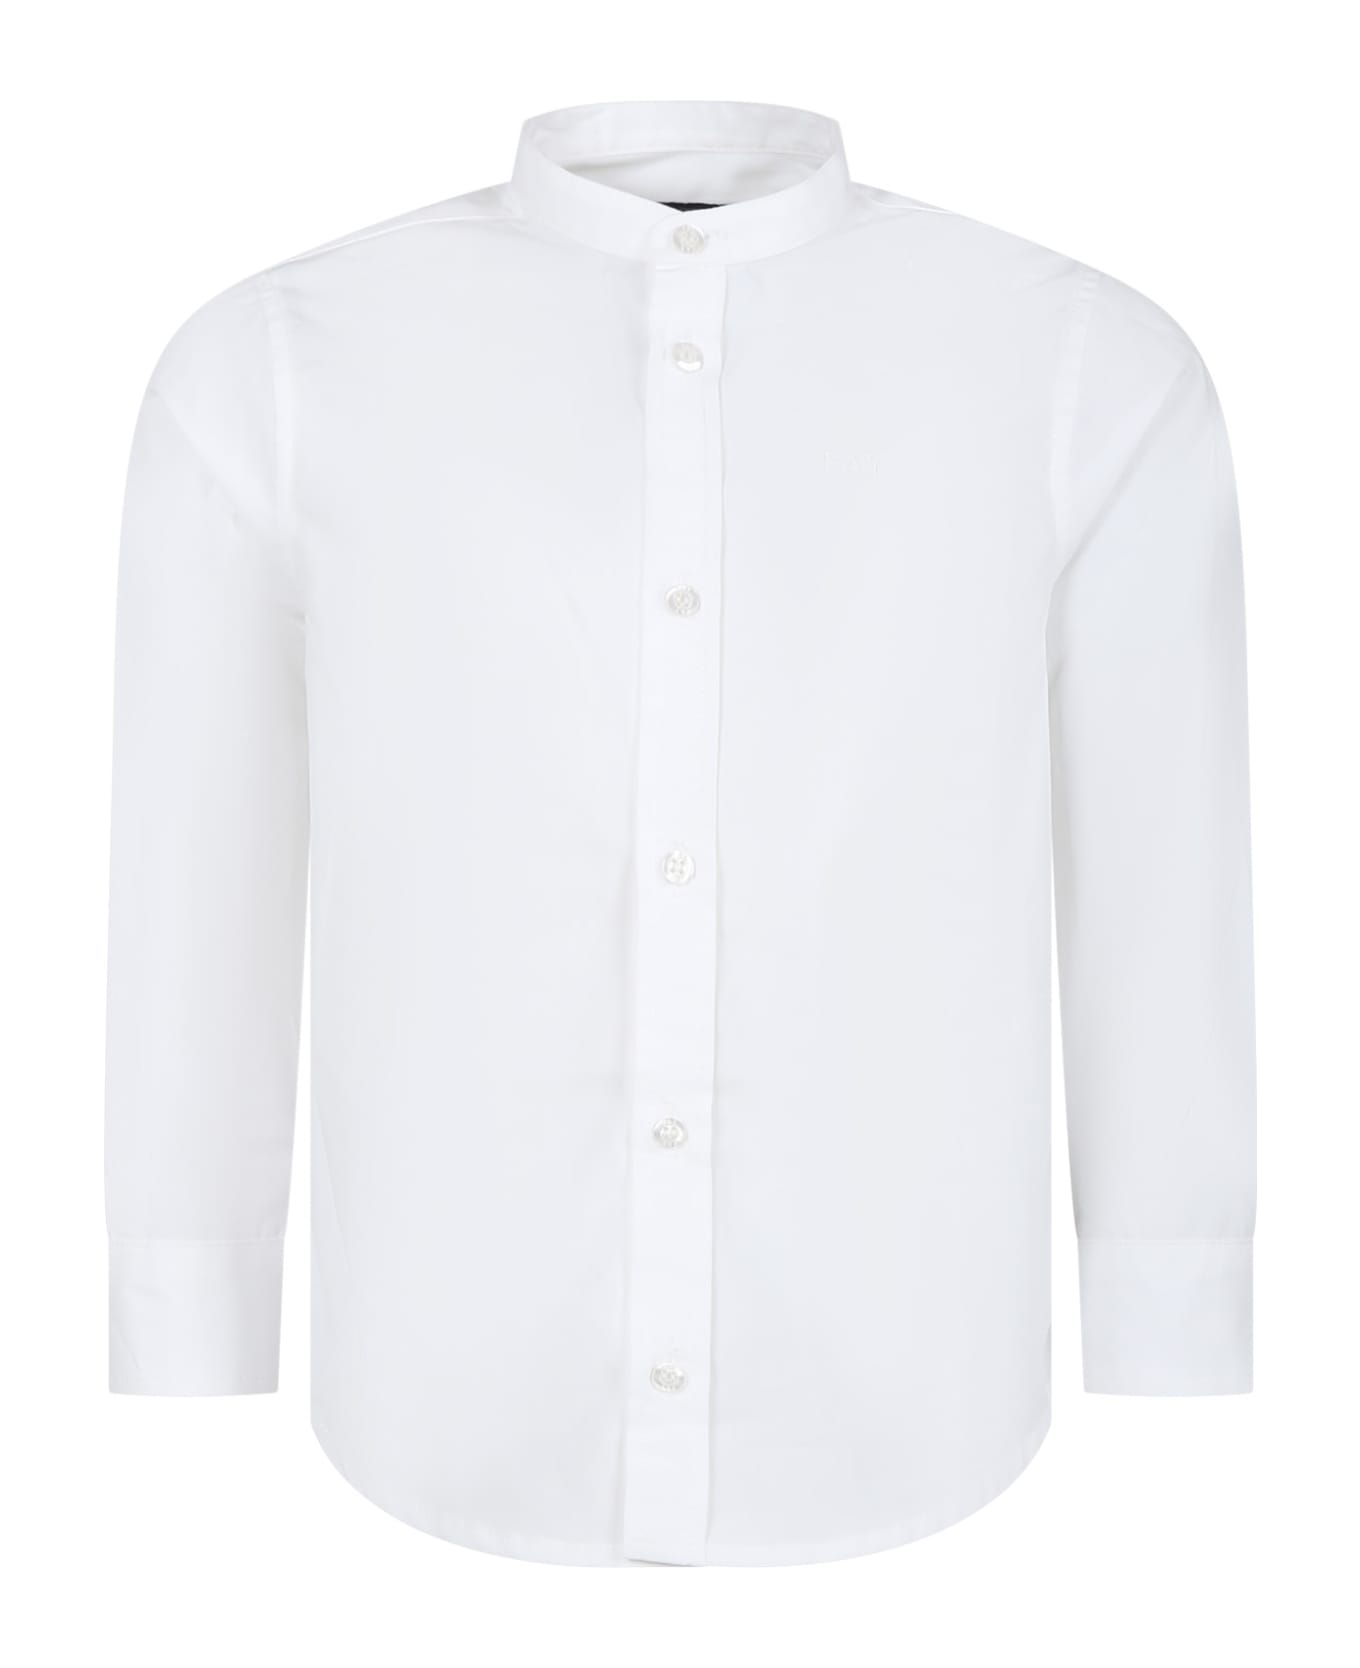 Fay White Shirt For Boy With Logo - White